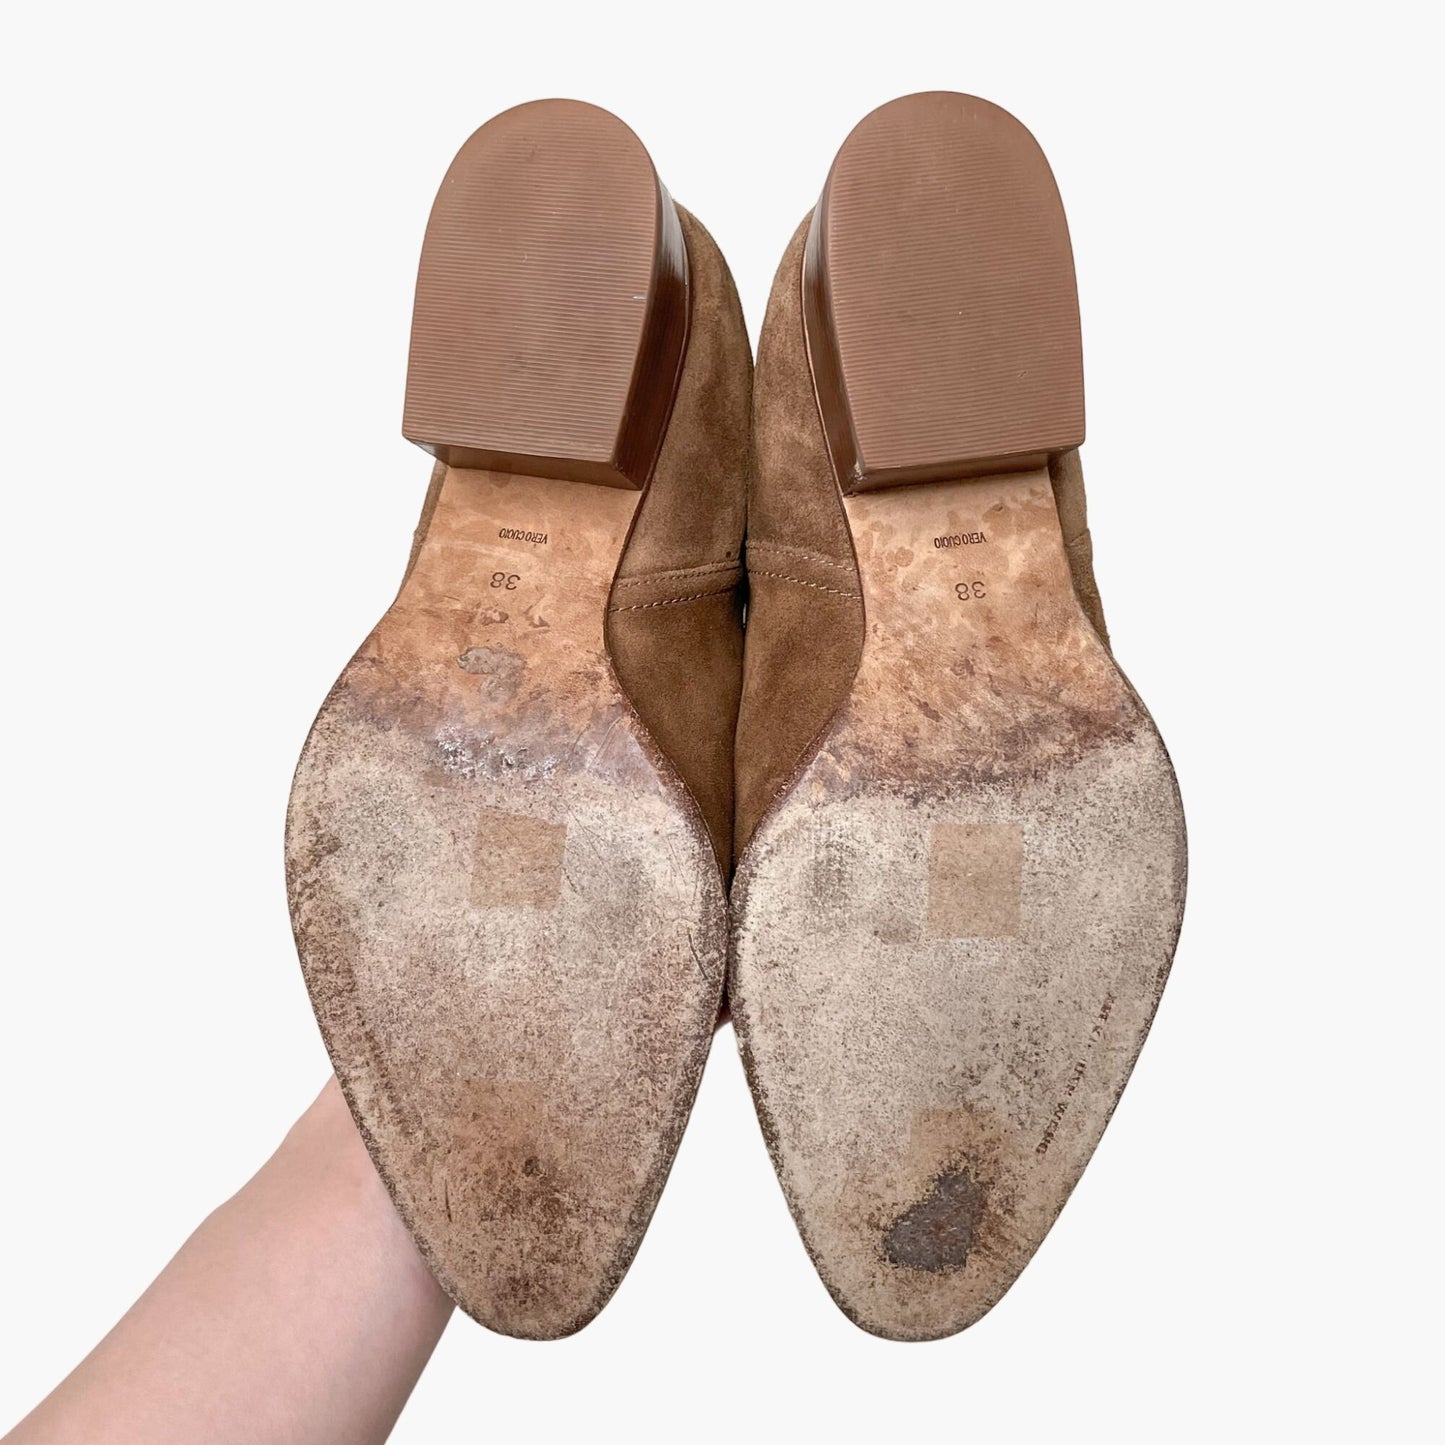 Alexander Wang Kori Boots in Dark Truffle Size 38